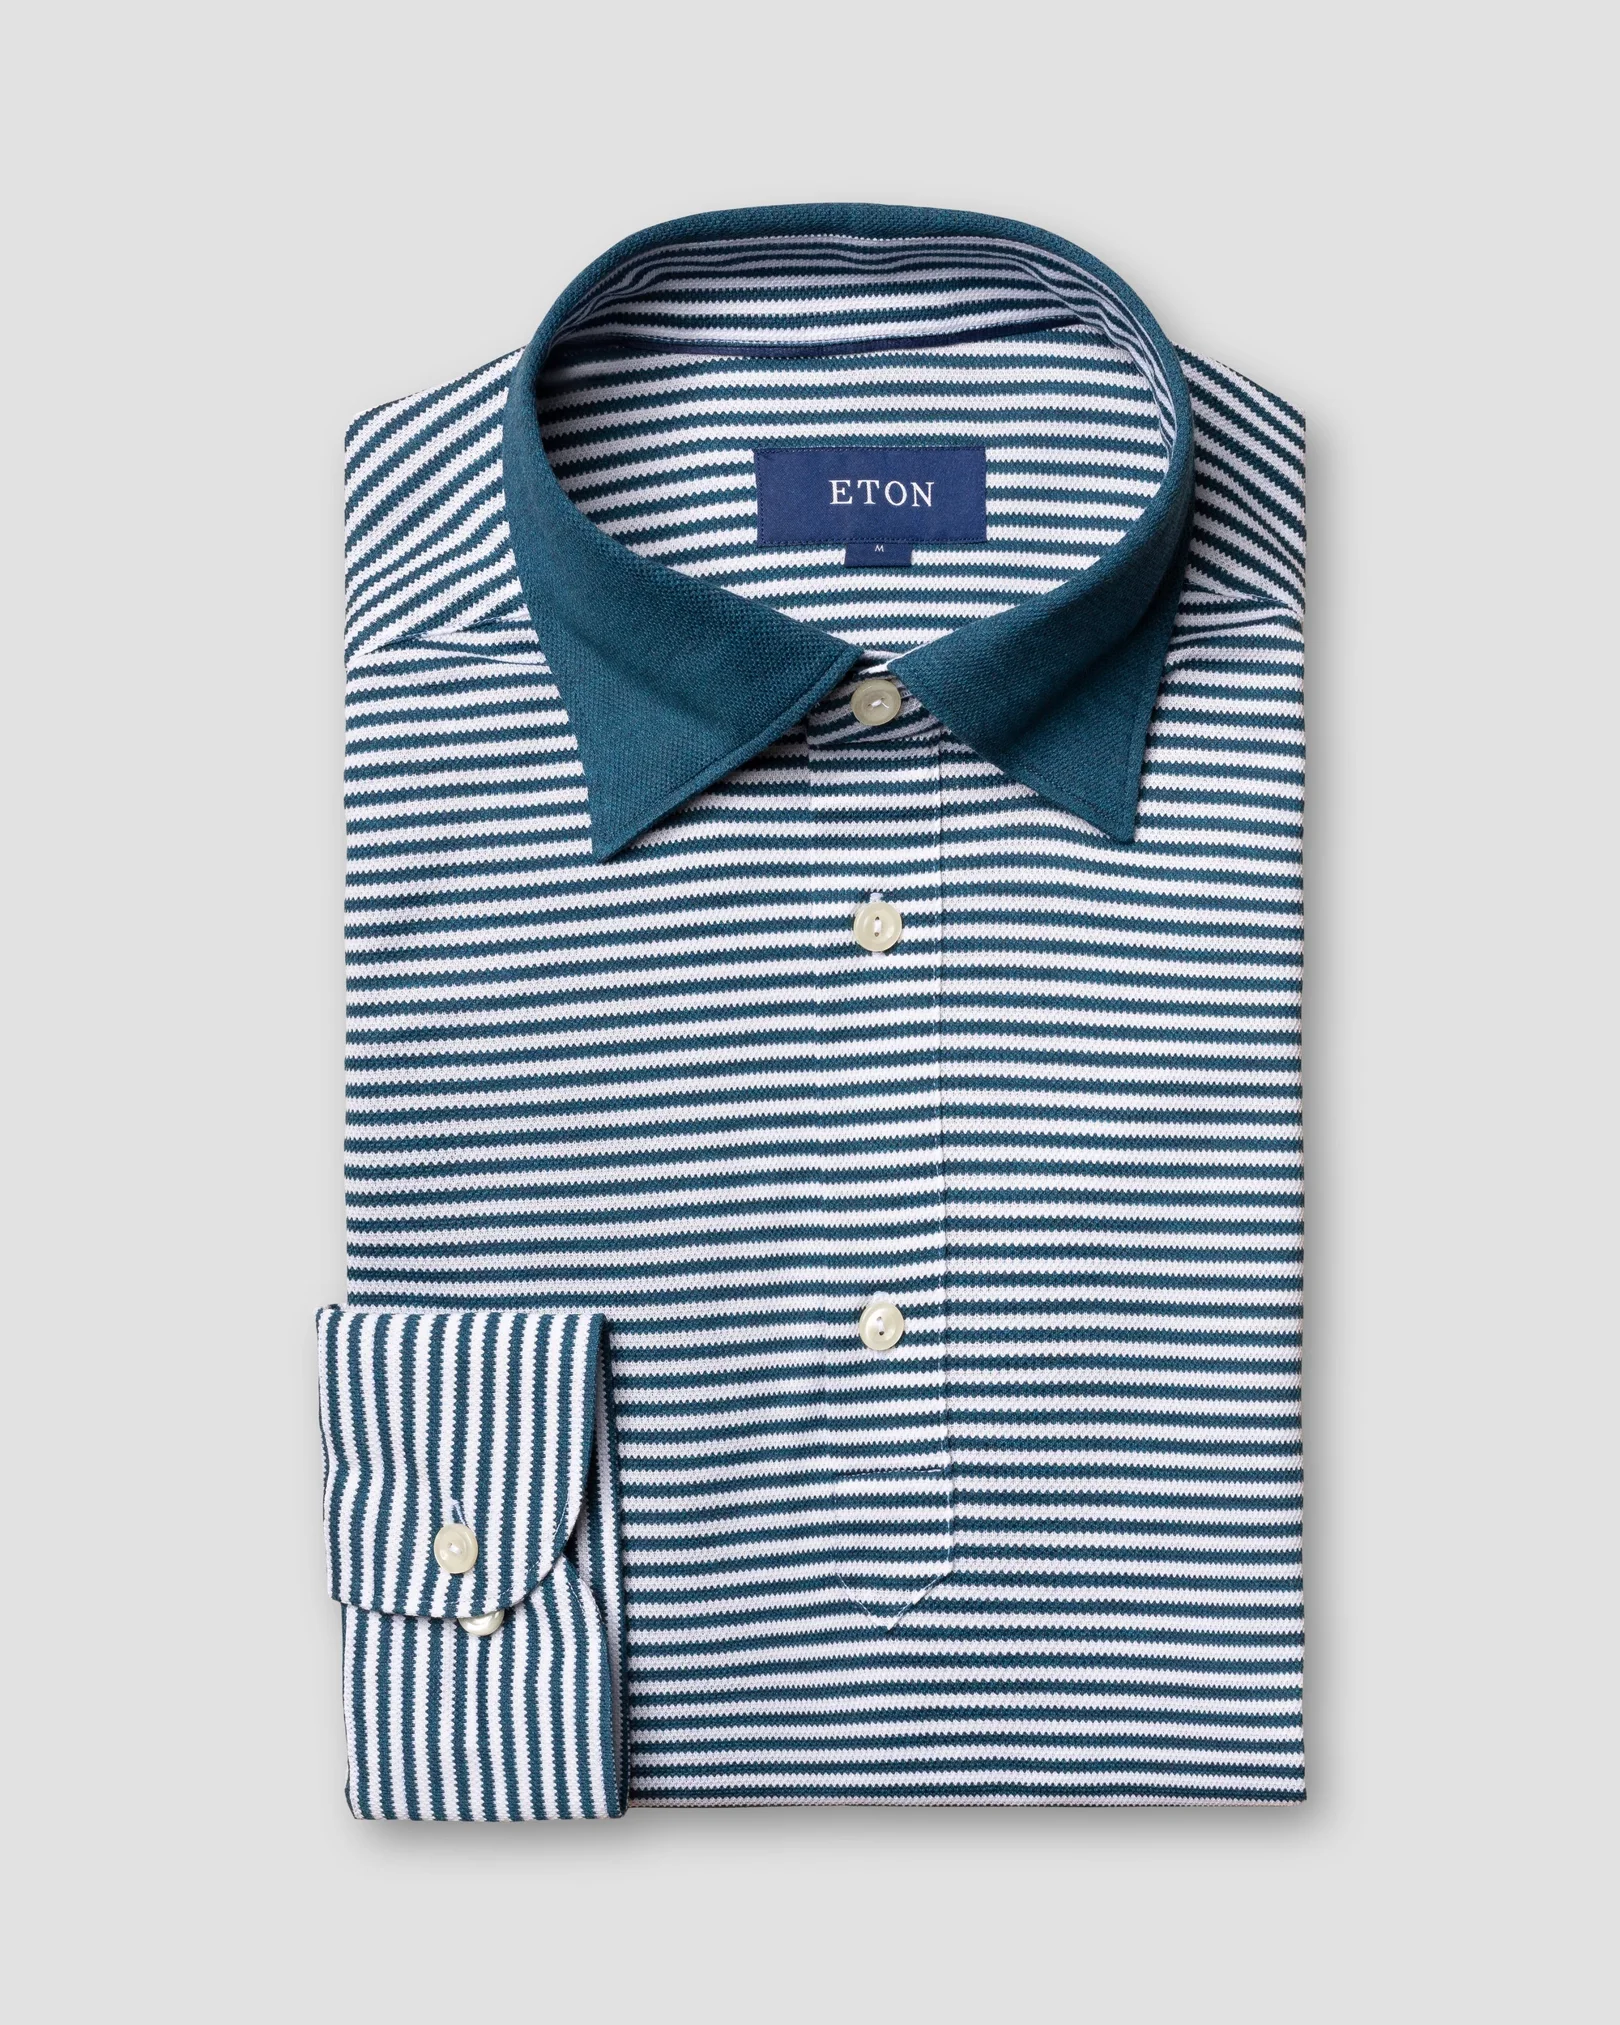 Eton - petrol striped polo shirt long sleeved